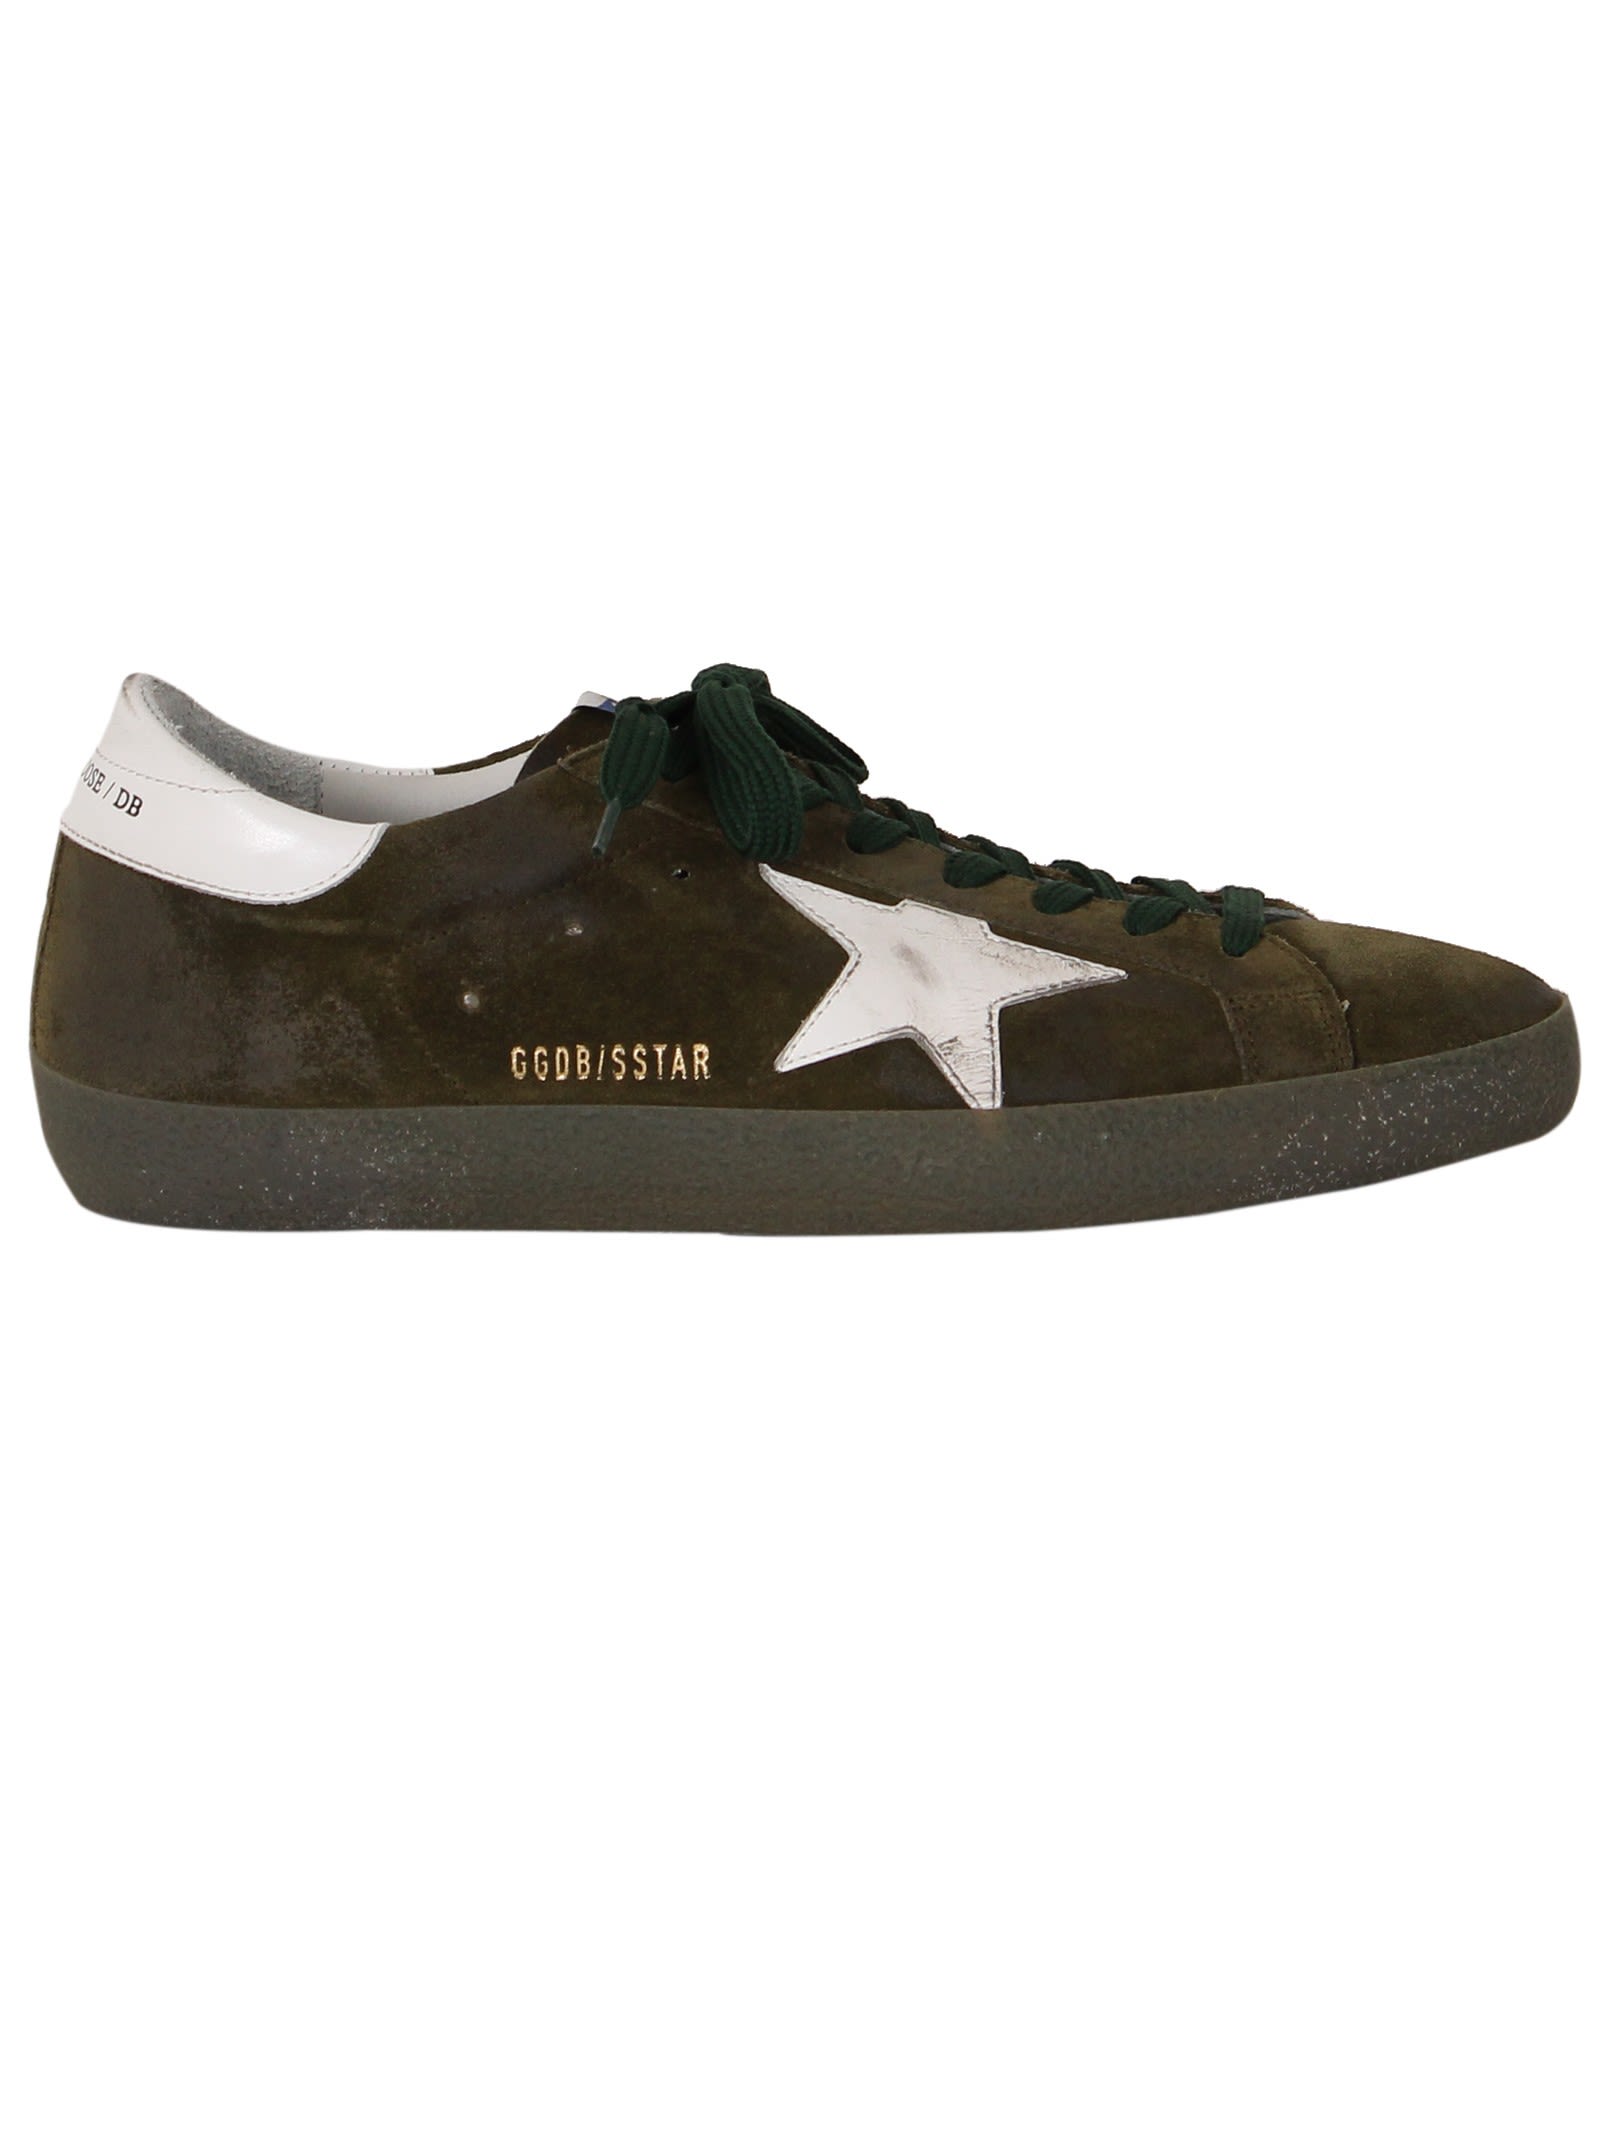 GOLDEN GOOSE Olive Green Distressed Suede Superstar Sneakers in Khaki ...